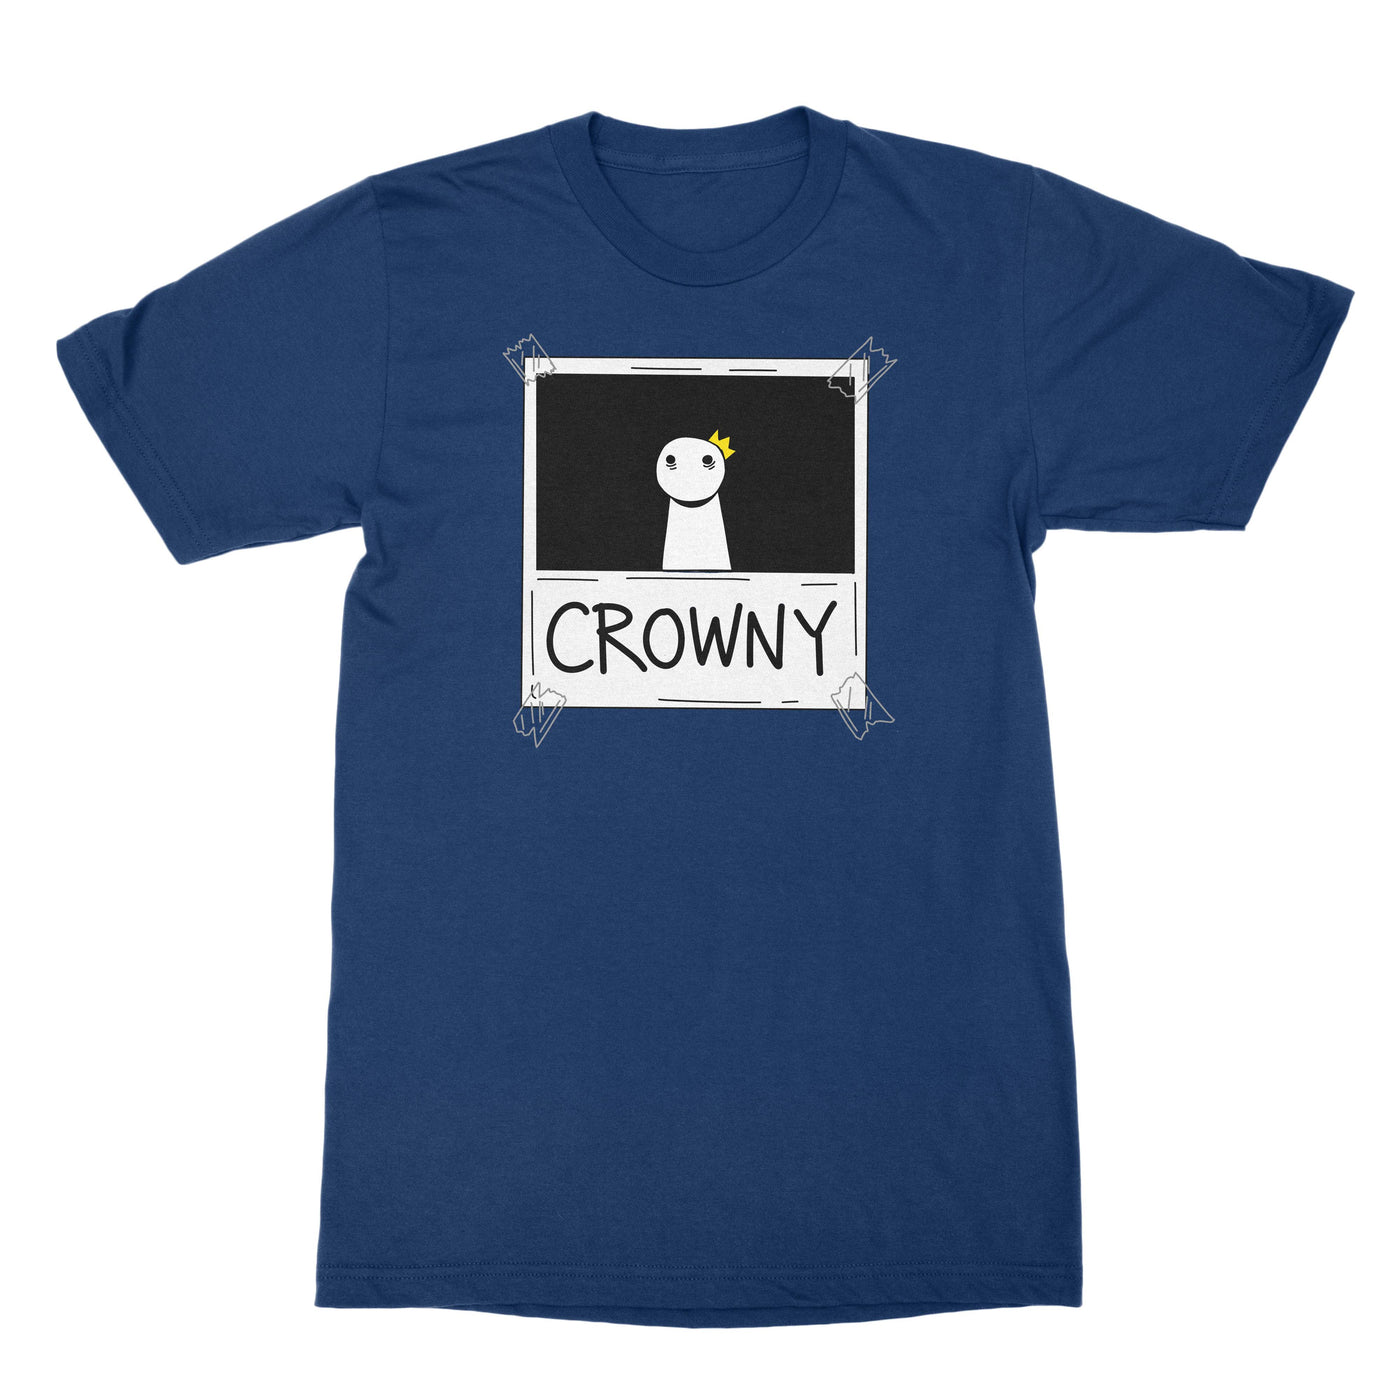 Crowny - Unisex Shirt Cool Blue